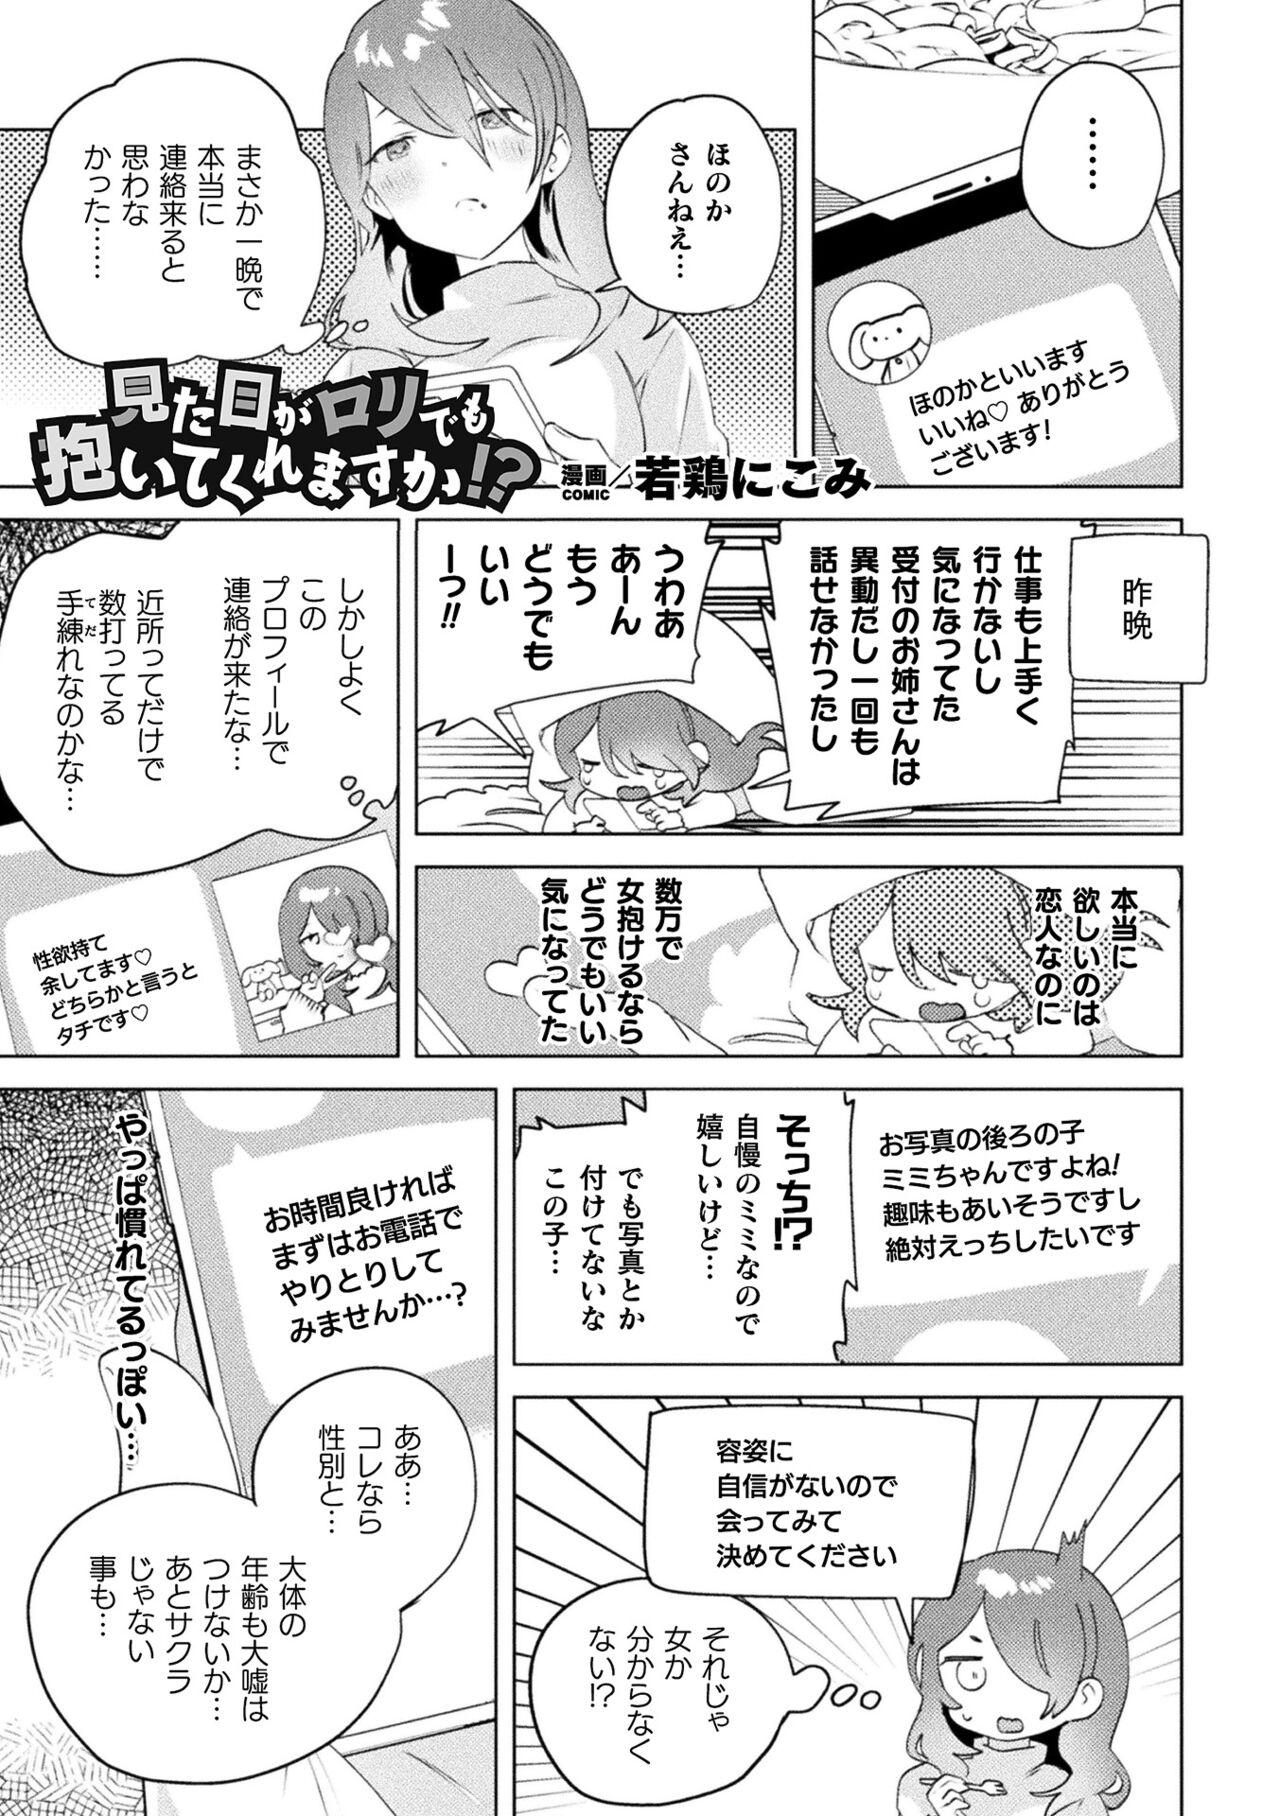 Suckingcock 2D Comic Magazine Mamakatsu Yuri Ecchi Vol. 3 Gostoso - Page 3